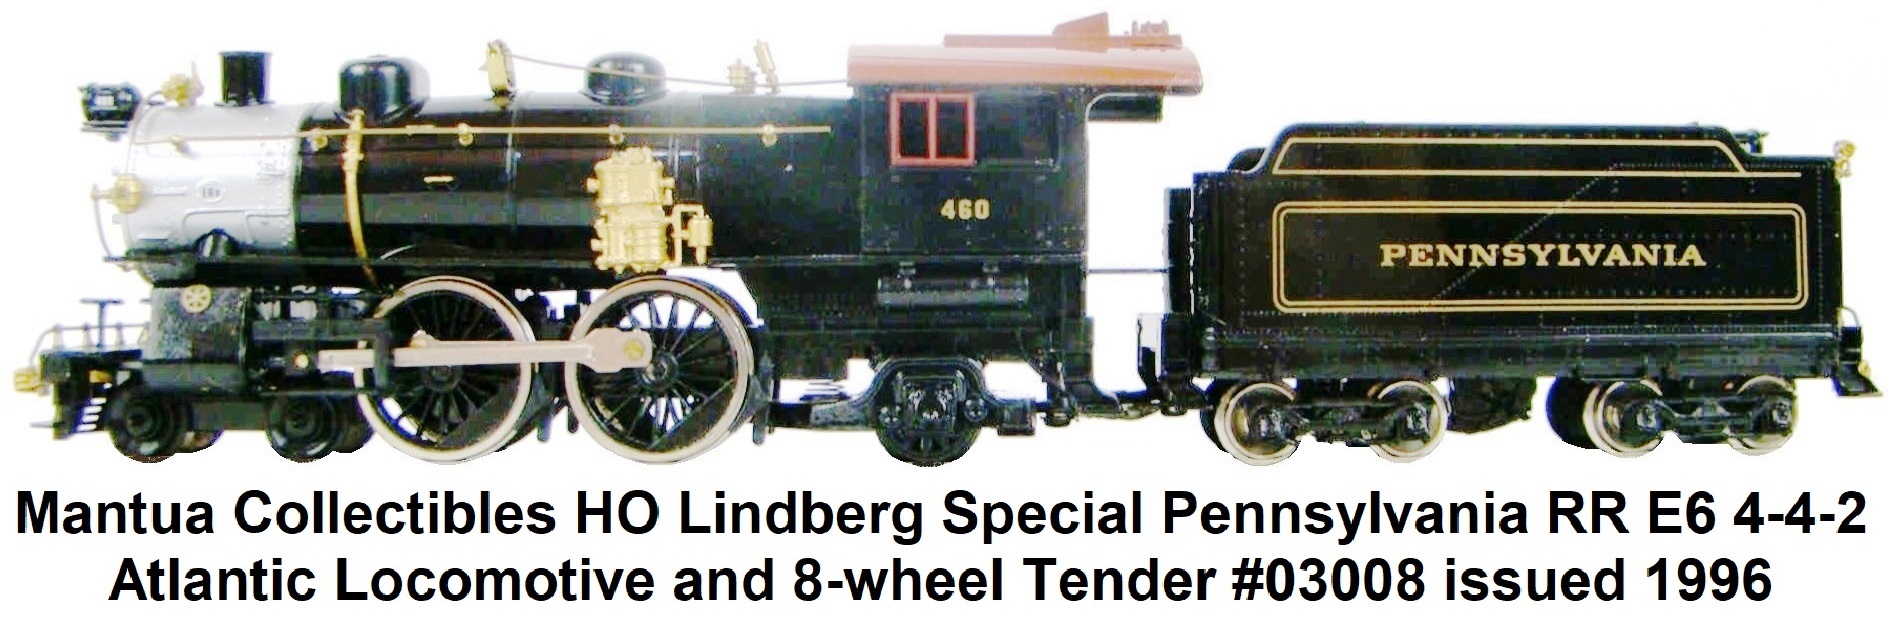 Mantua Collectibles HO Lindberg Special Pennsy #460 E6 4-4-2 Atlantic Locomotive #03008 made 1996